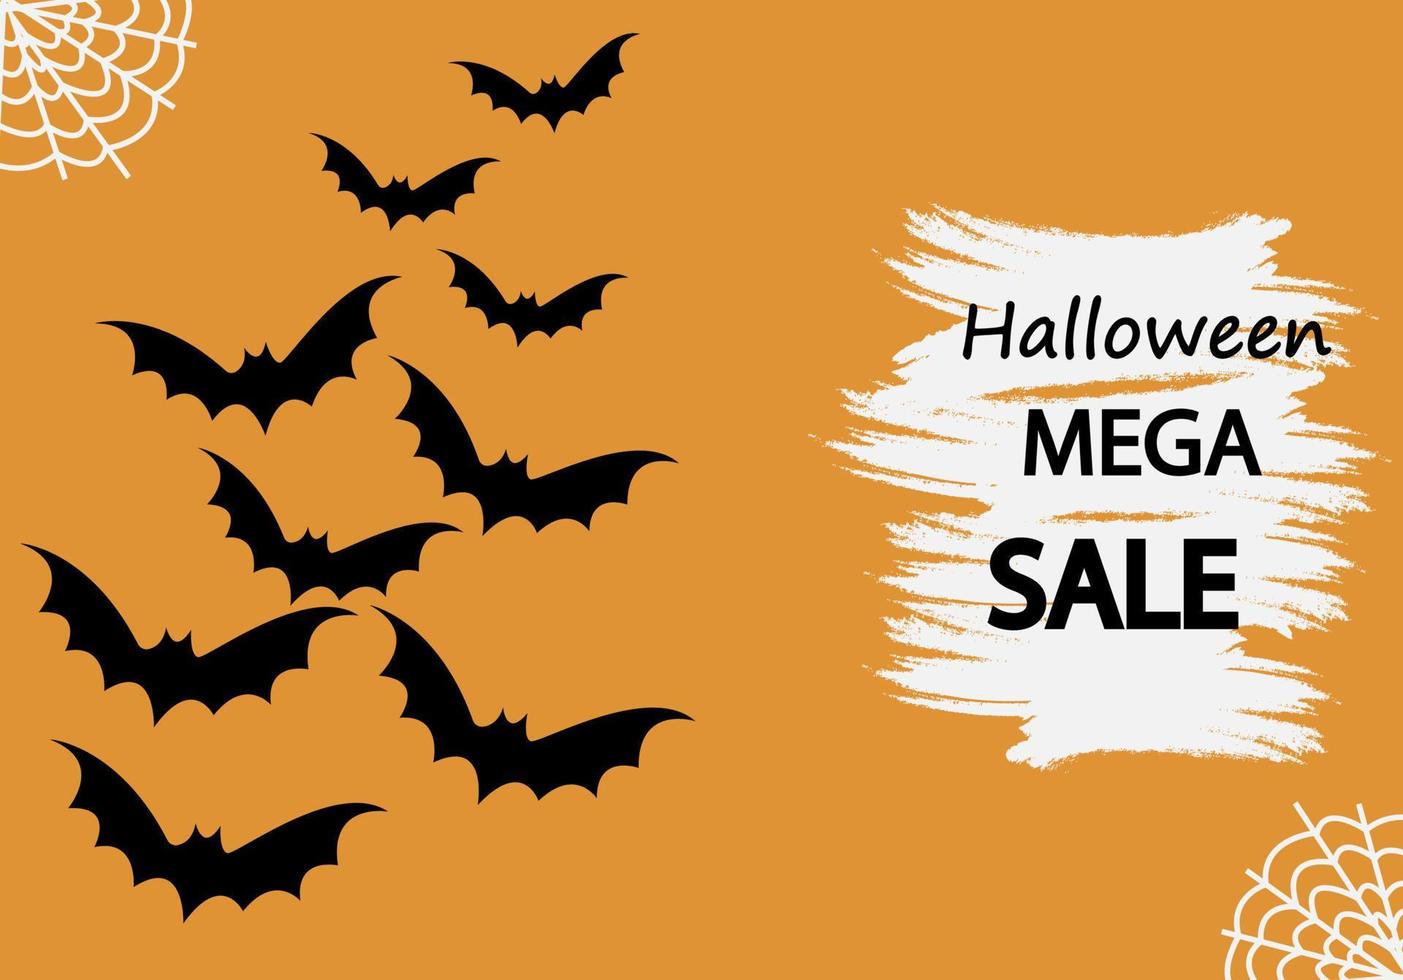 Halloween mega sale on orange background with bats. Halloween Sale template poster or banner. Vector illustration